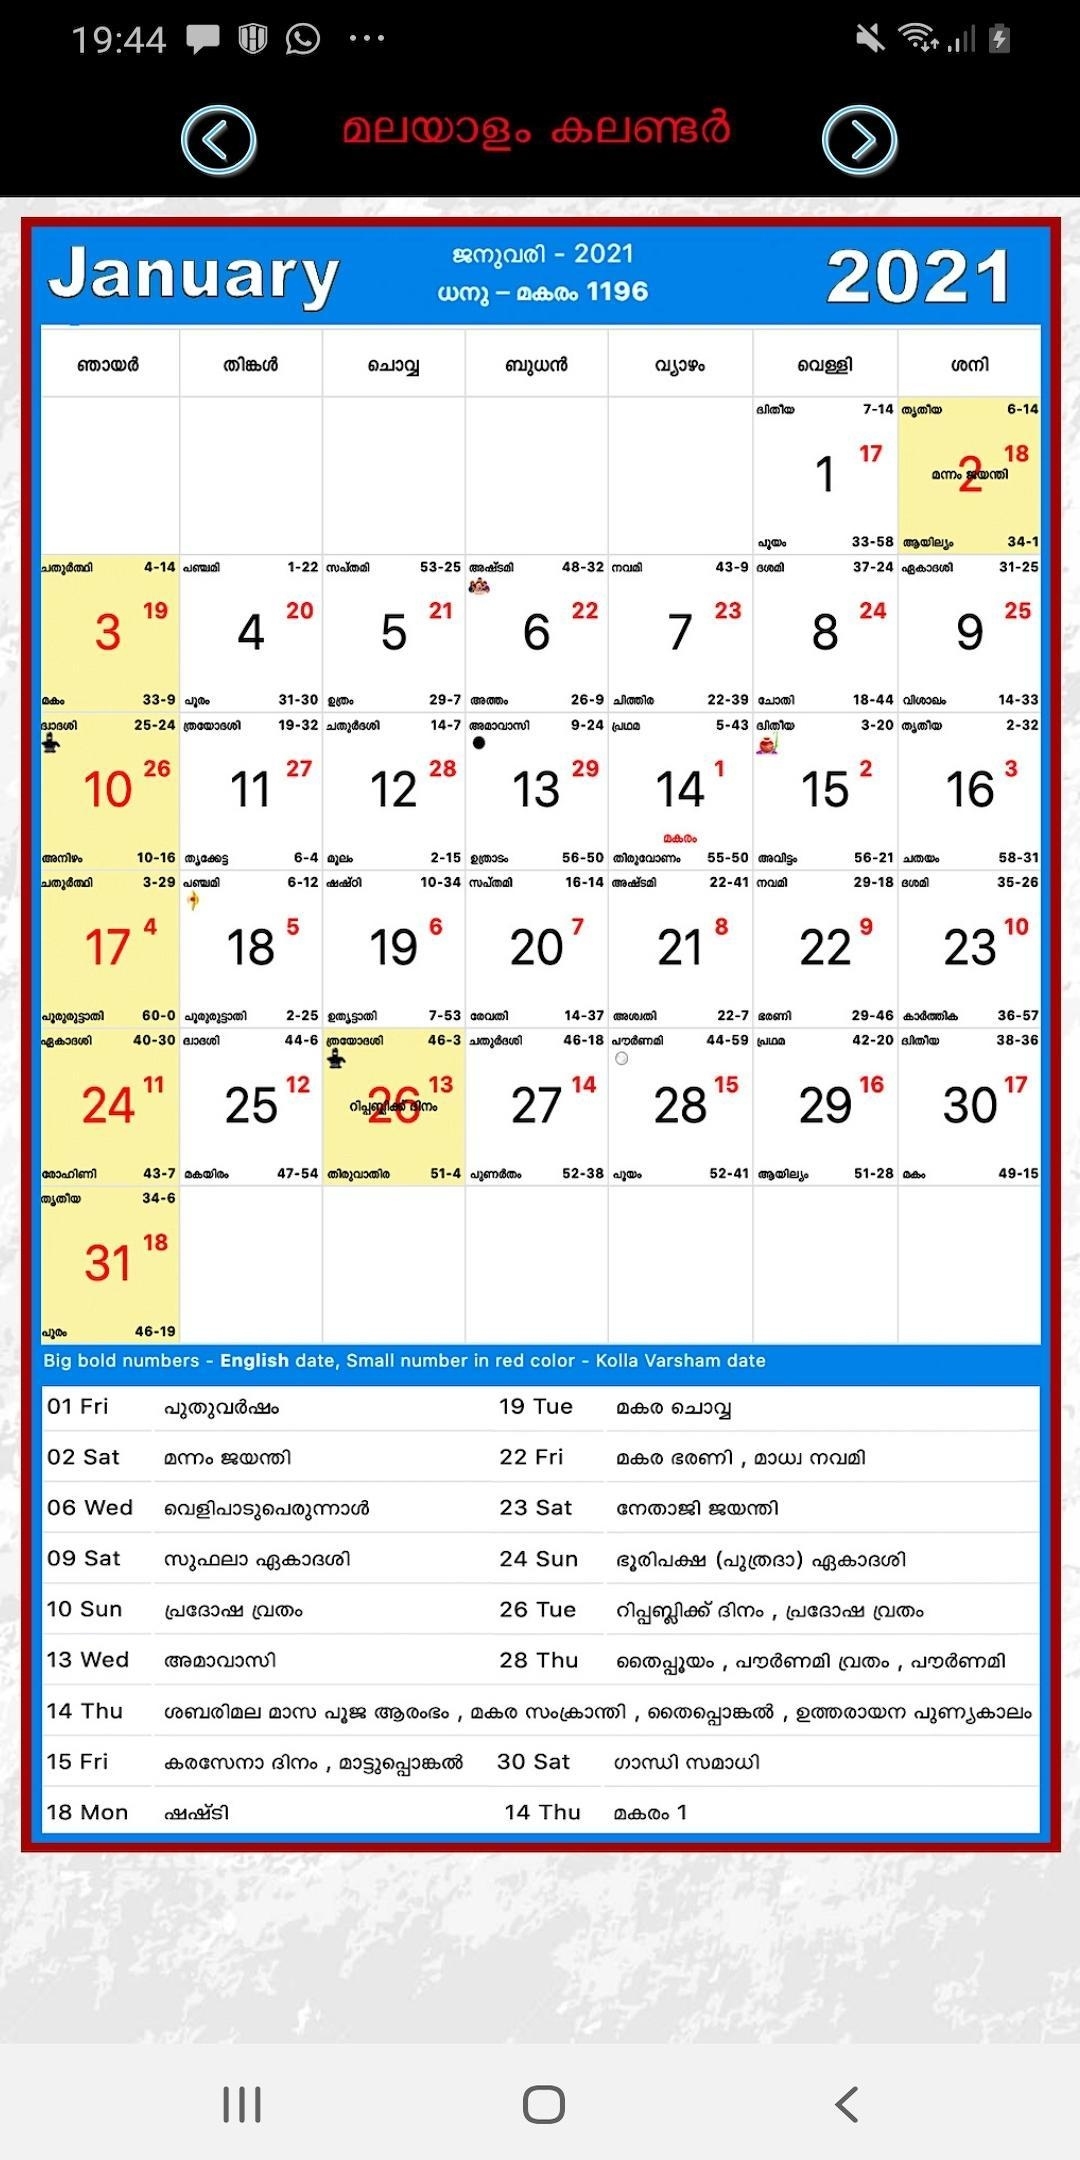 Malayalam Calendar 2021 For Android - Apk Download 2021 Malayalm Manoram Calender